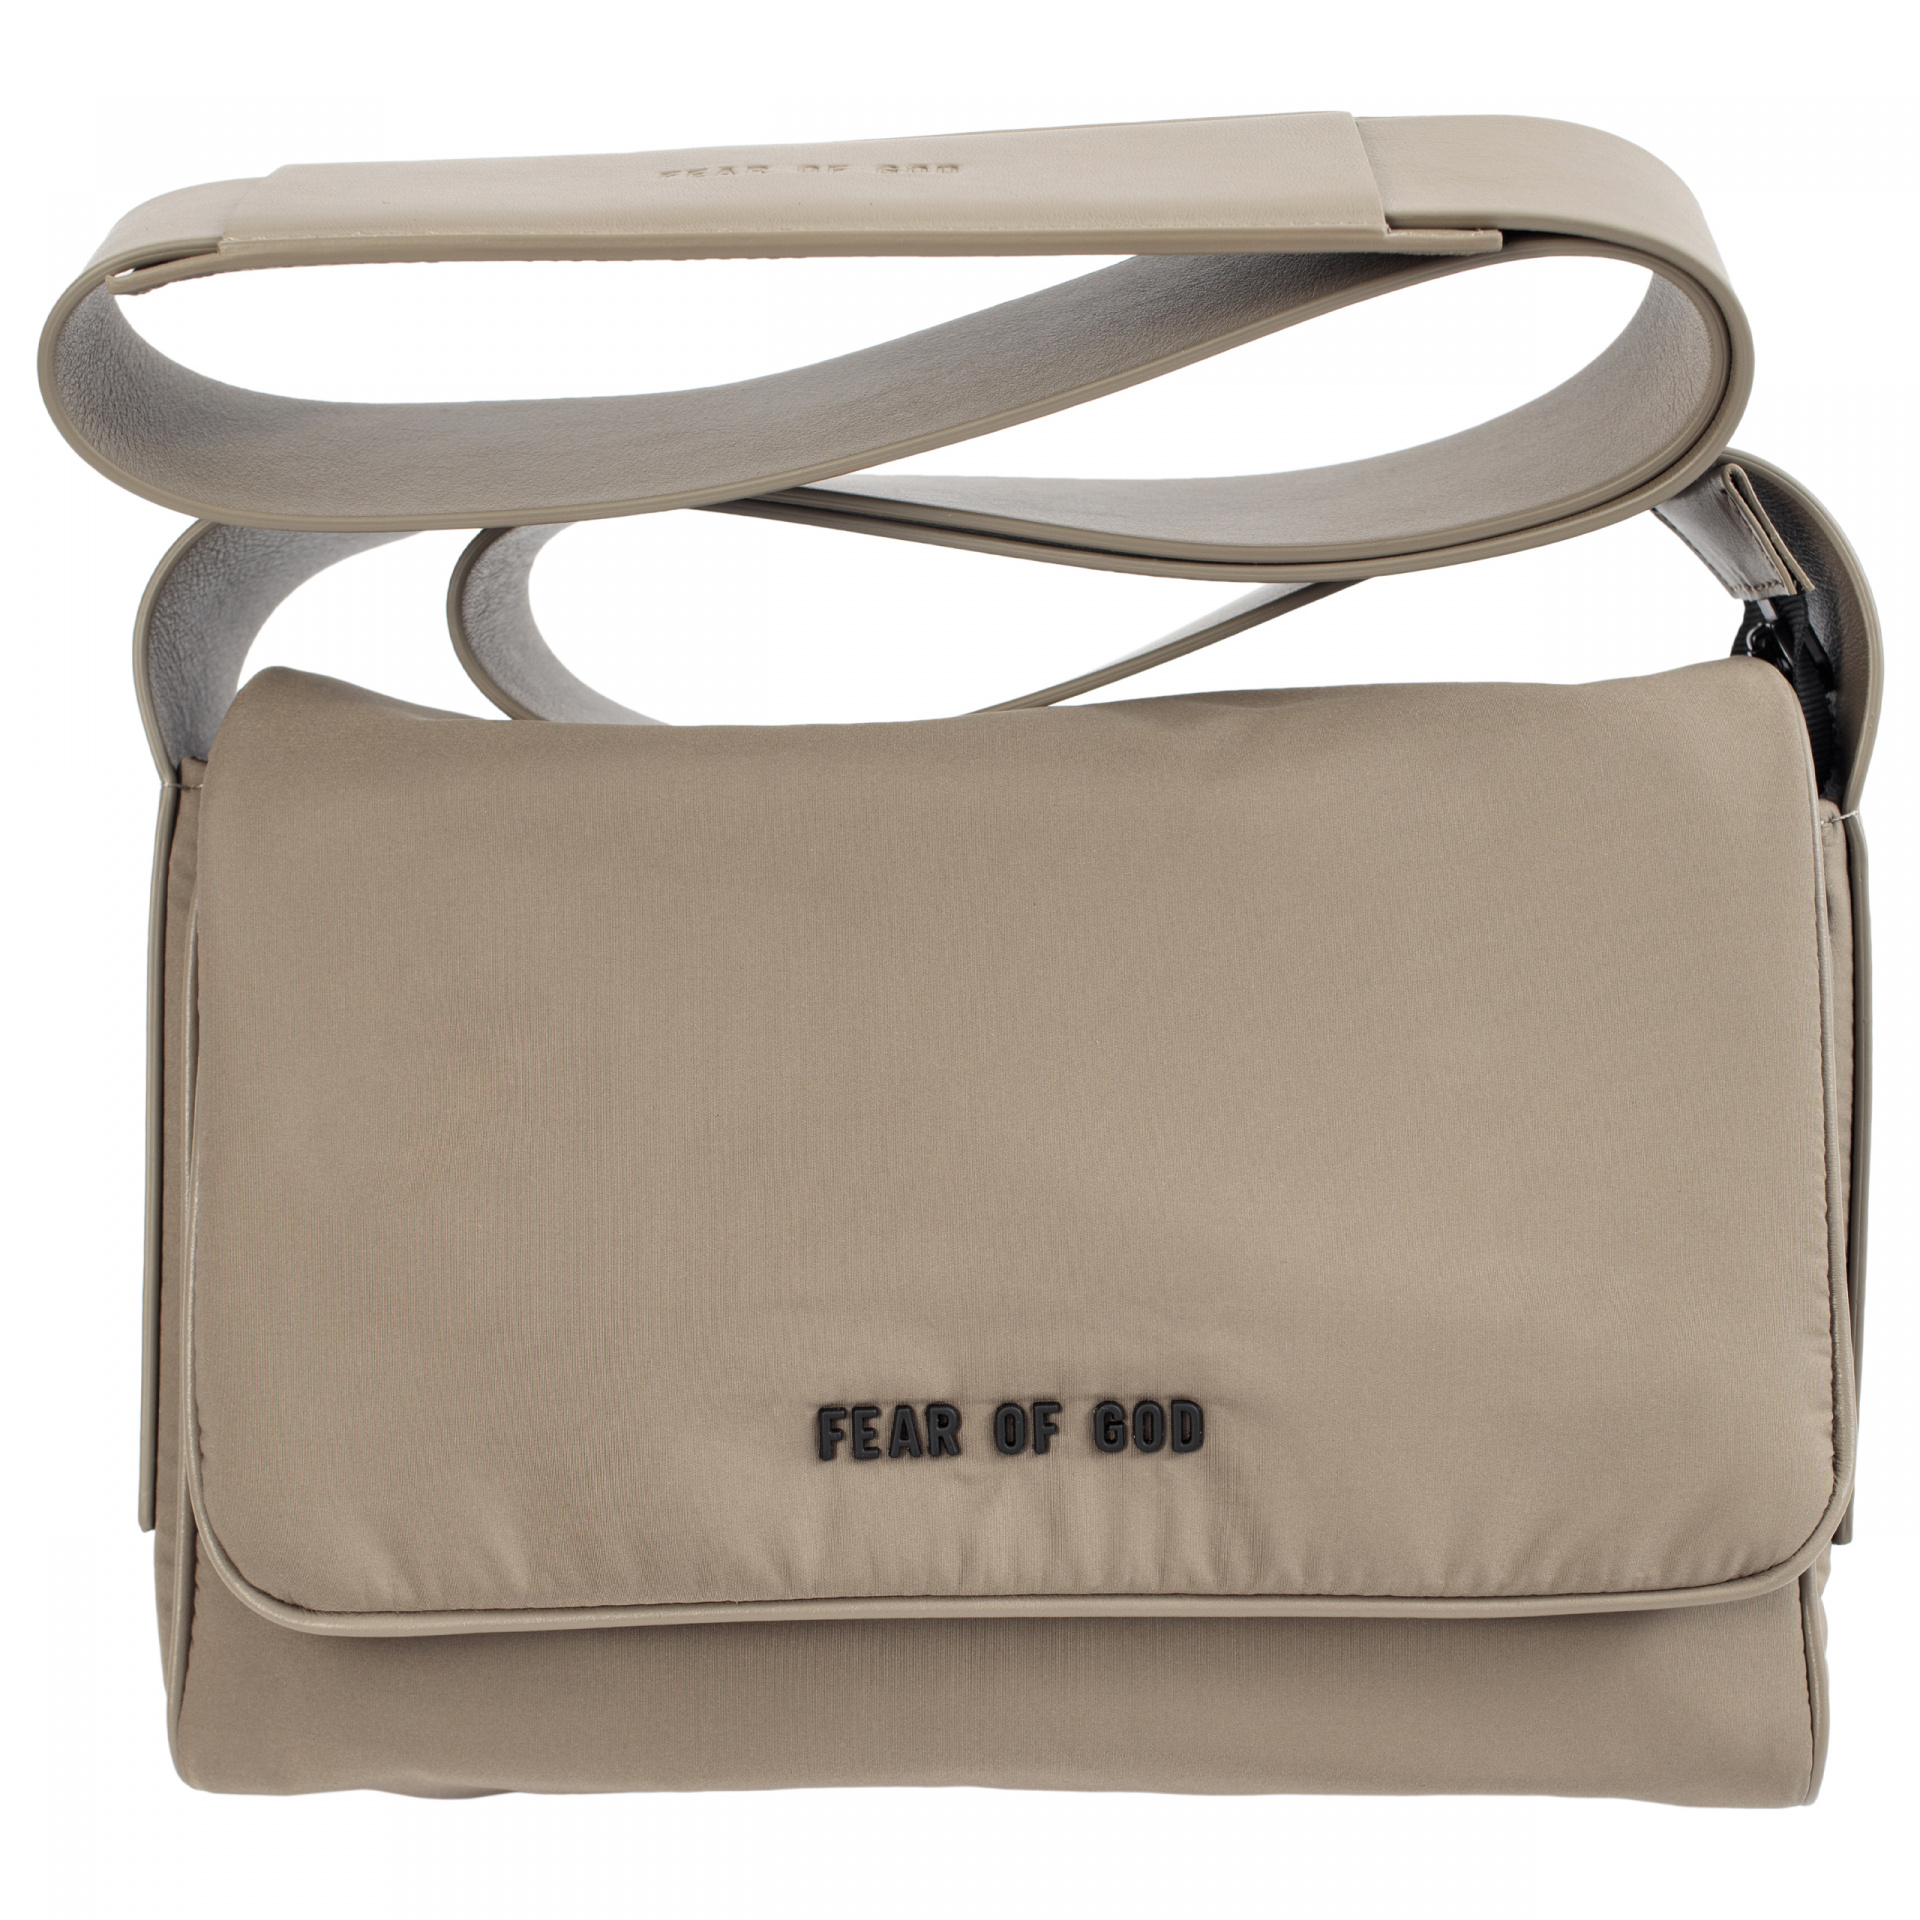 Fear of God Nylon Crossbody bag in beige